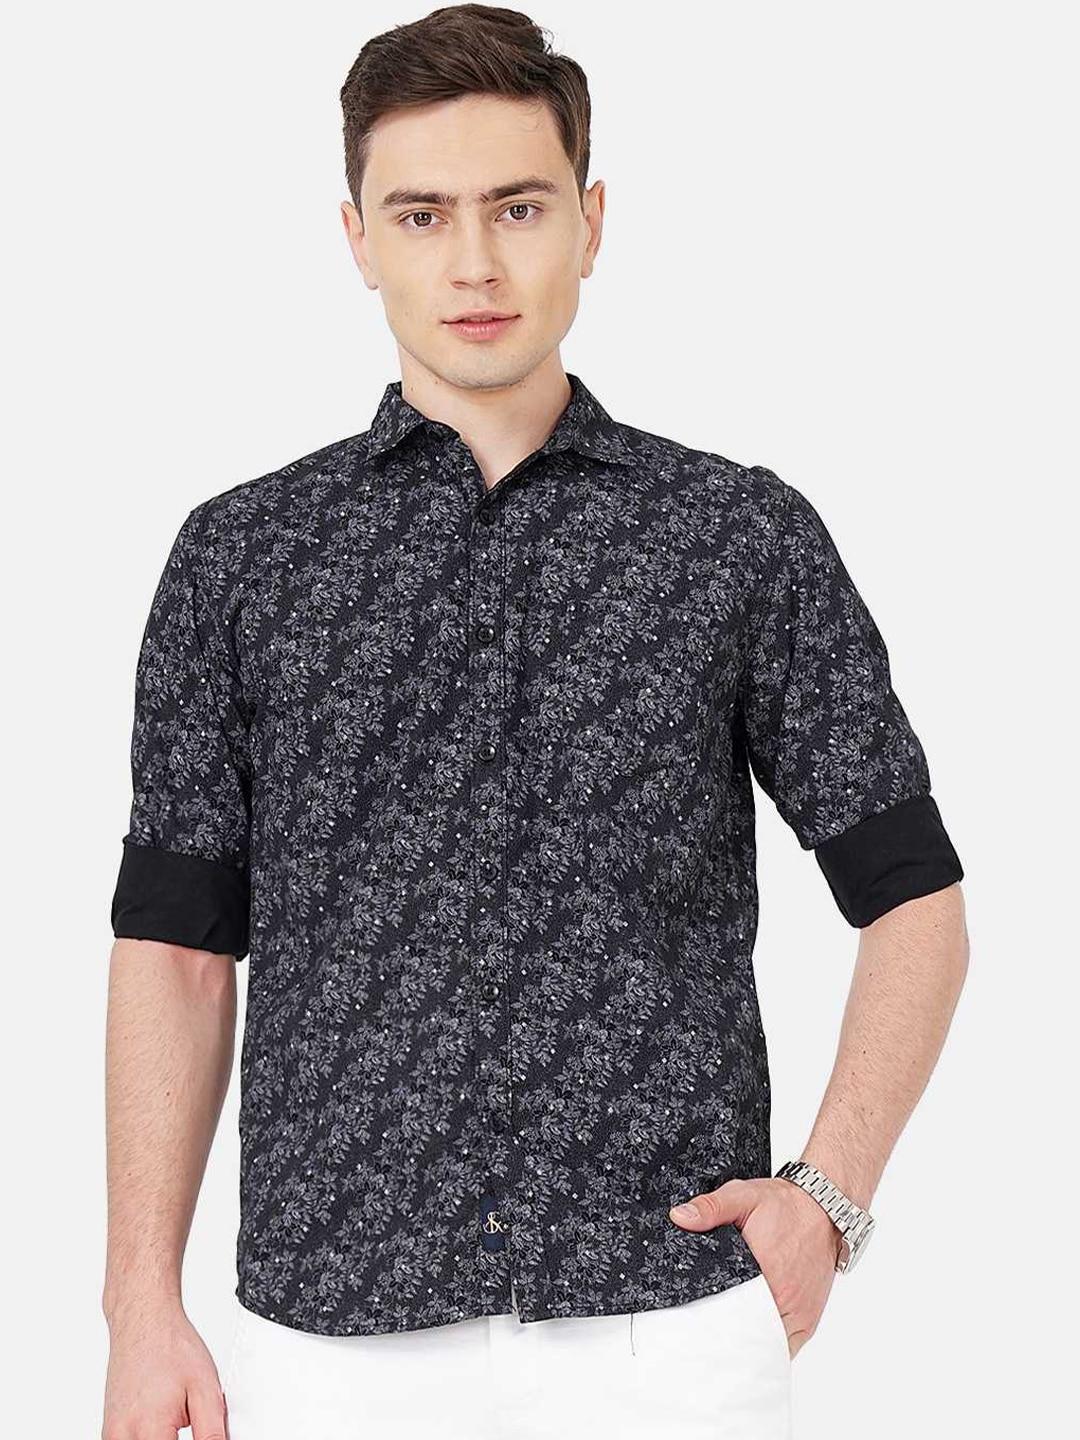 soratia-men-slim-fit-floral-printed-casual-cotton-shirt